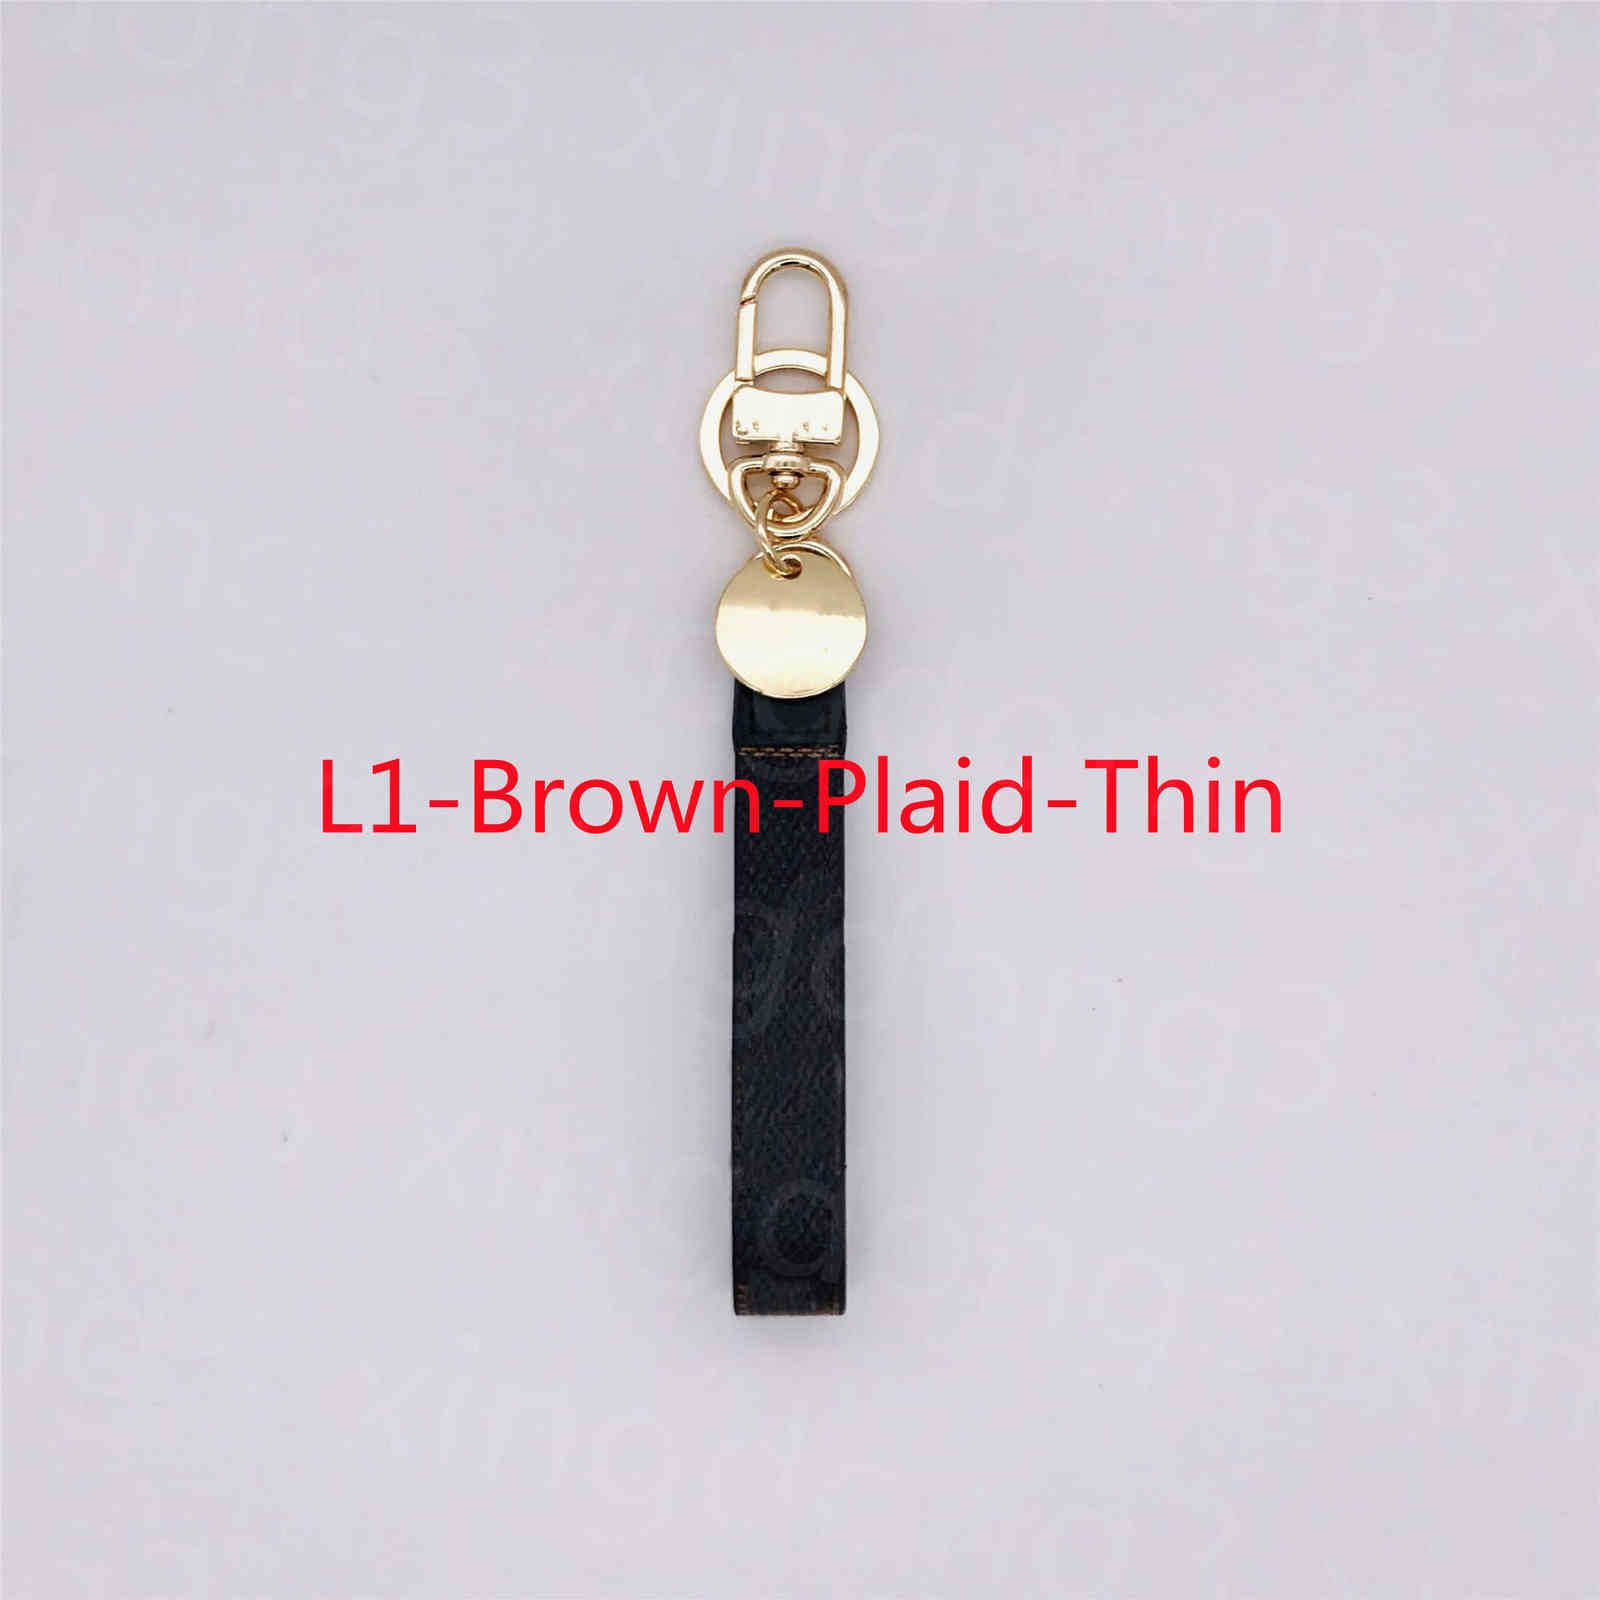 L1-Brown-plaid-dun